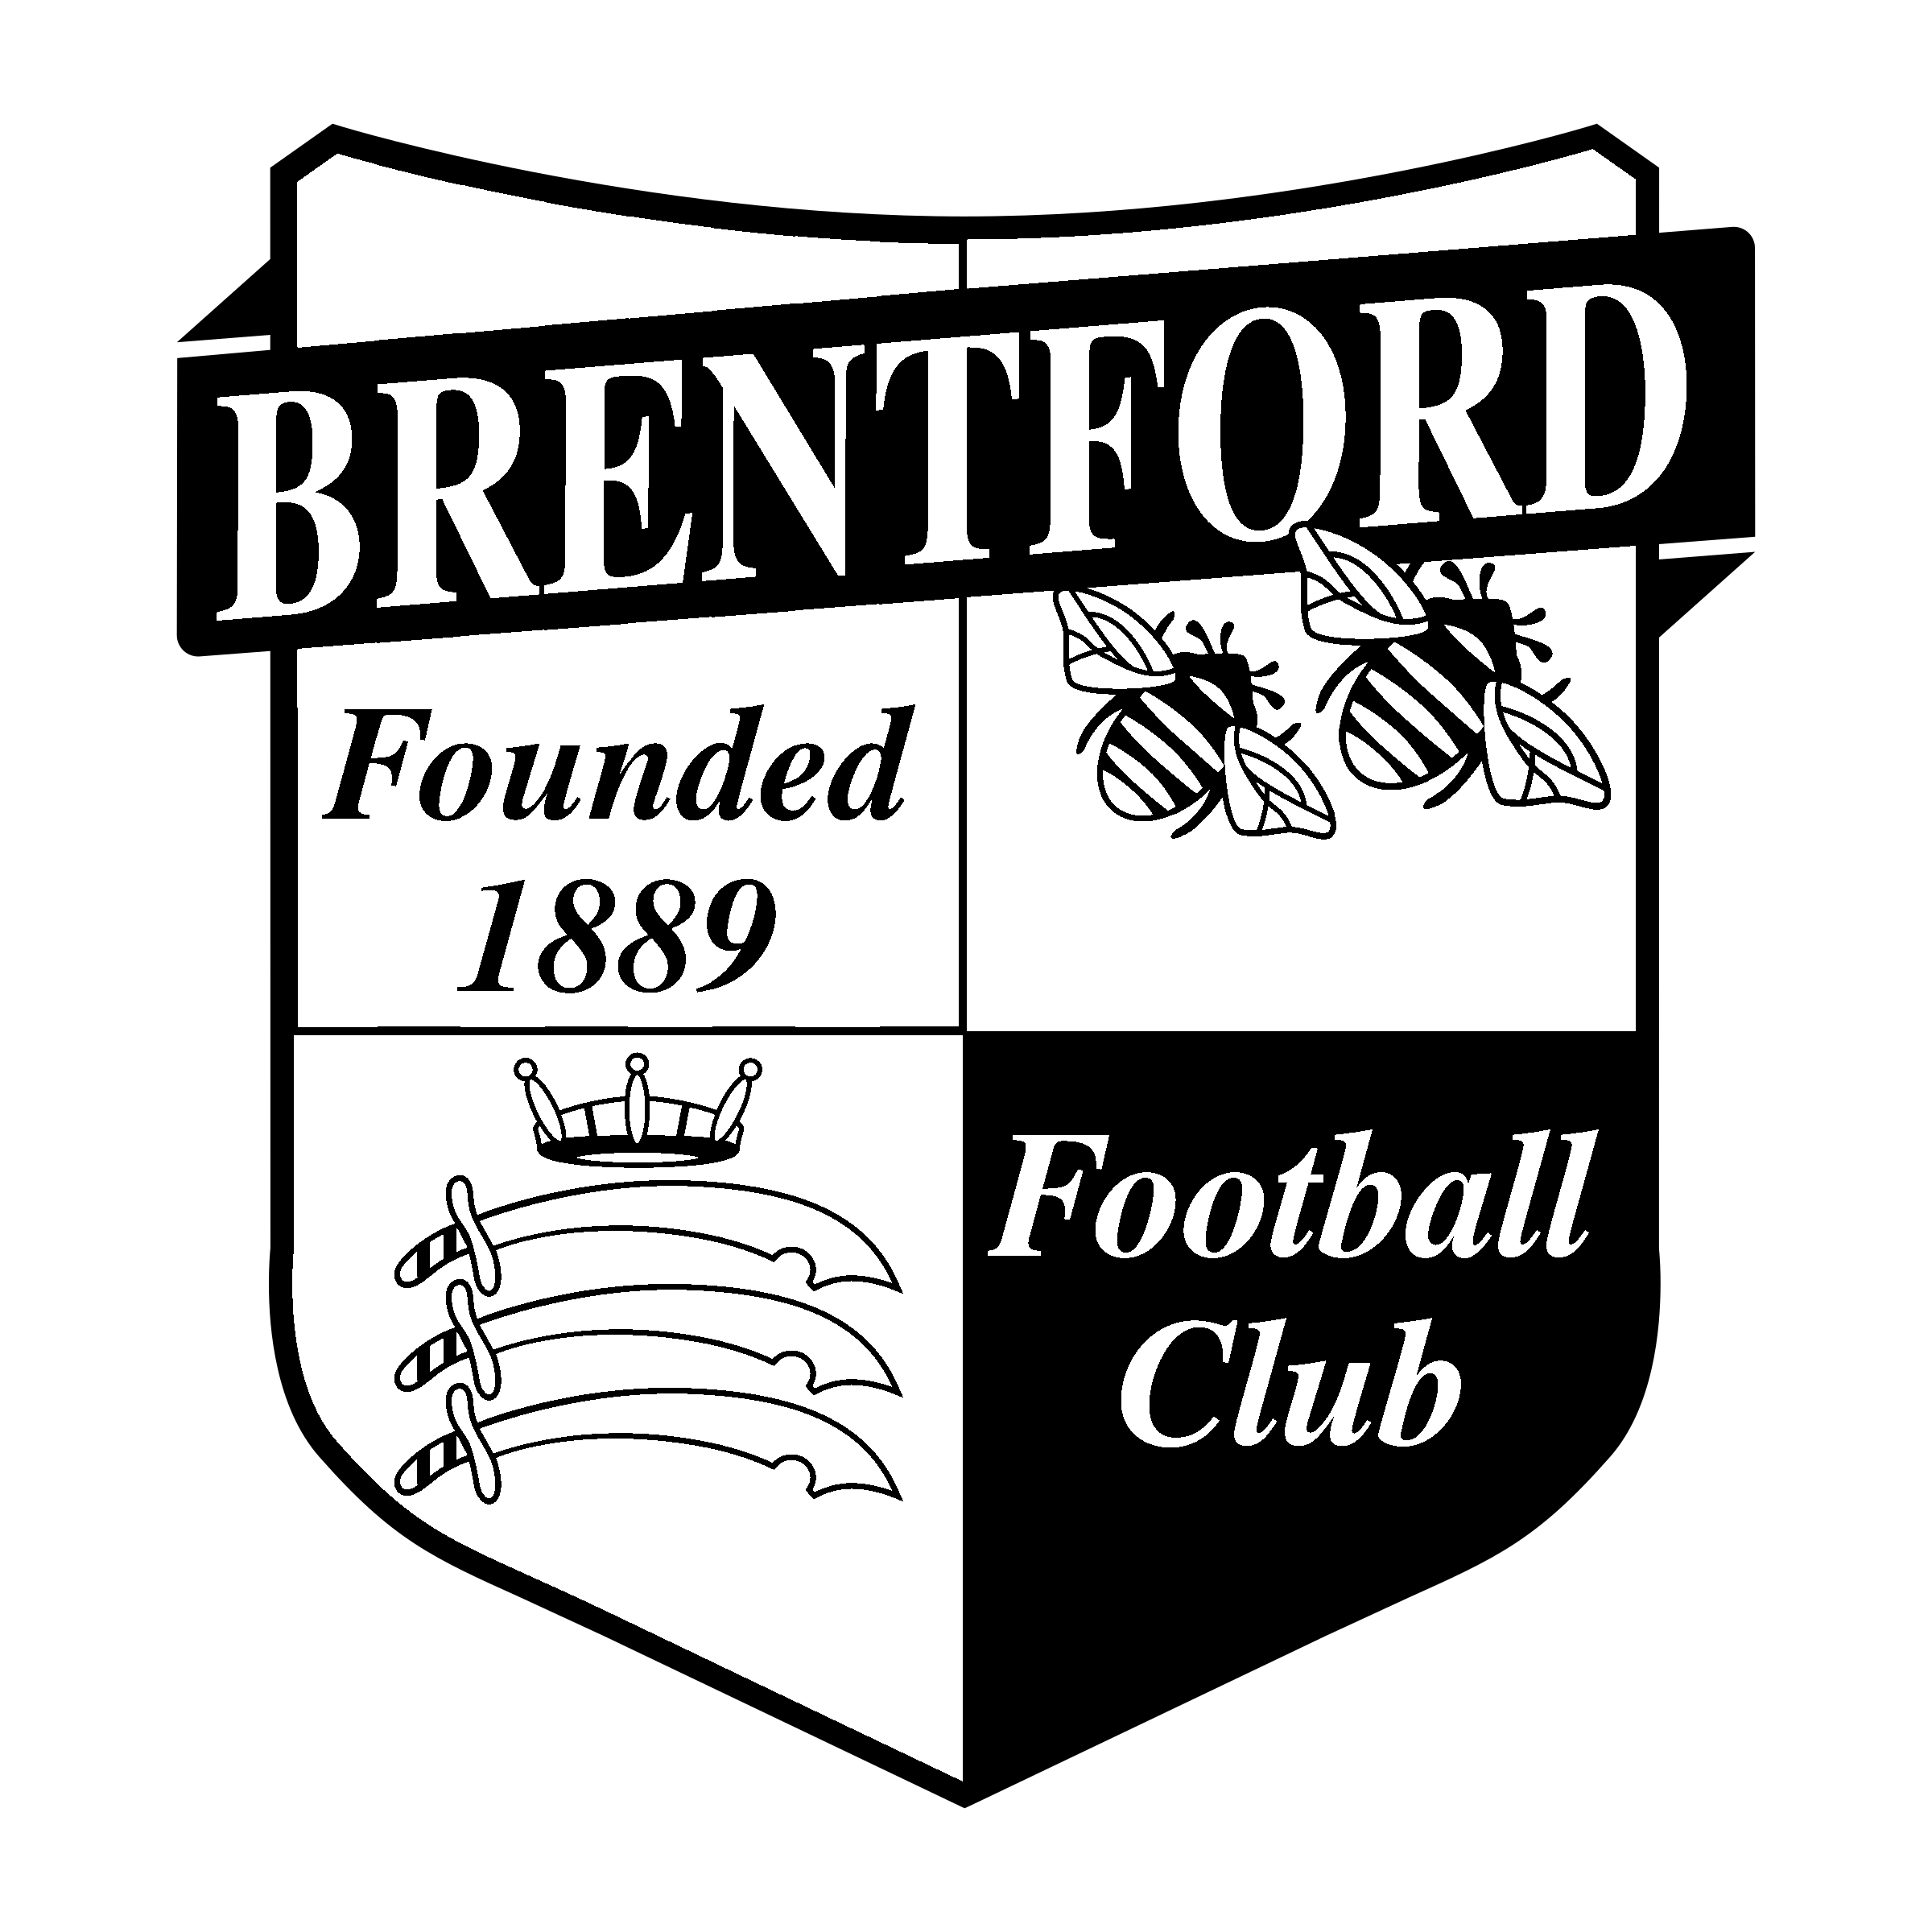 brentford-fc-logo-black-and-white.png